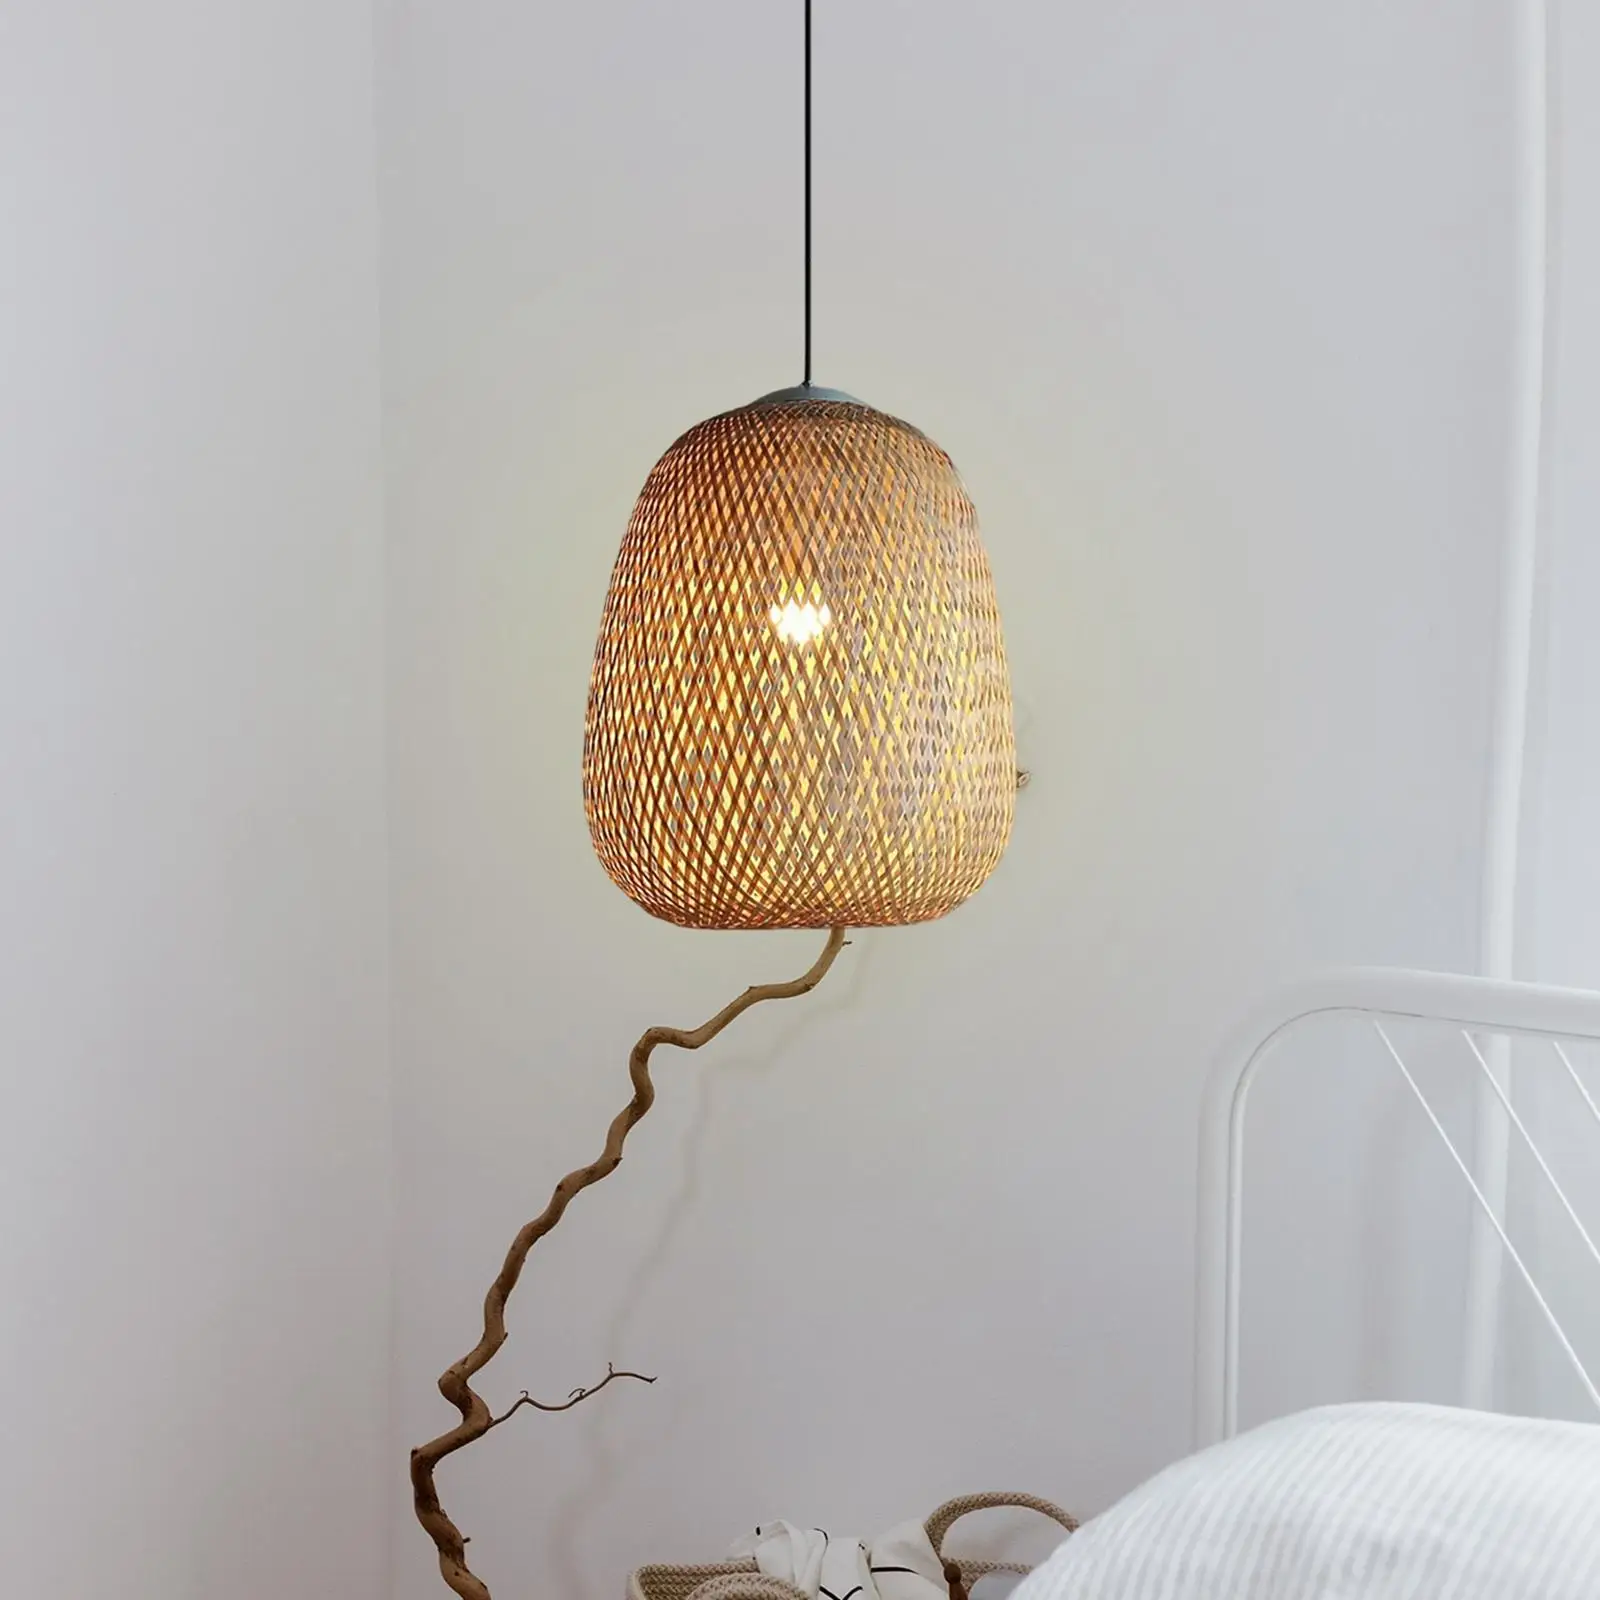 Rattan Pendant Light, Hanging Light Ceiling Lighting Fixture, Bamboo Wicker Lamp Shade, for Farmhouse Cafe Teahouse Bar